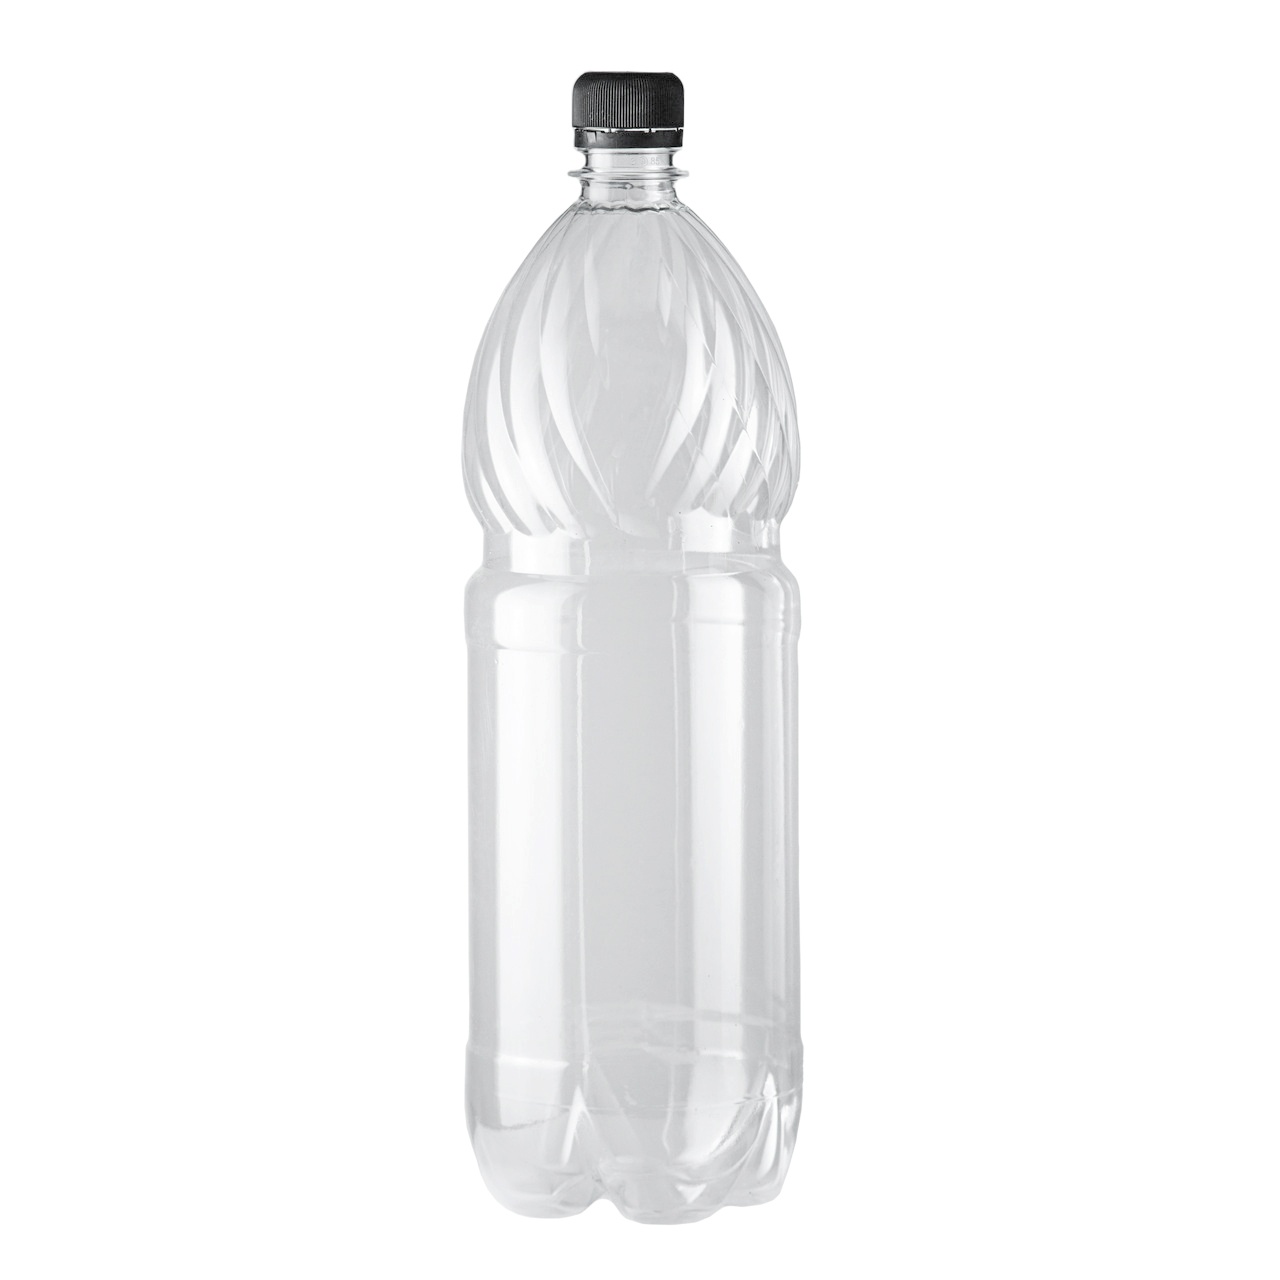 Пэт 2. Бутылка ПЭТ 0,5л (УПК 100шт). Бутылка 1,0 л ПЭТ B-1217. Бутылка ПЭТ 1,0 Л (500 шт) "купол" d-28 мм. Крышка ПЭТ (1-82 горячий).